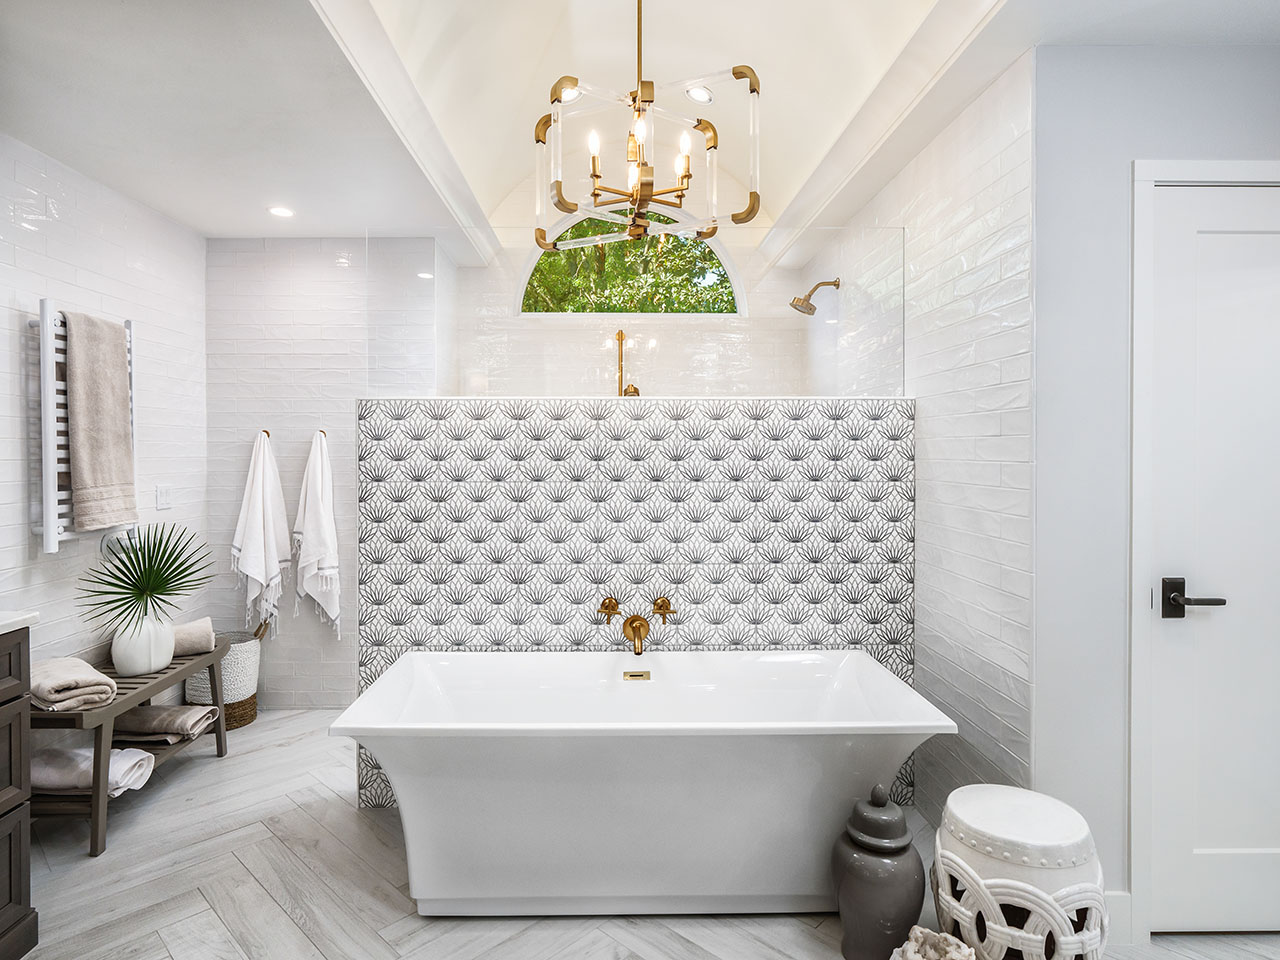 Top 10 Luxury Bath Design Ideas